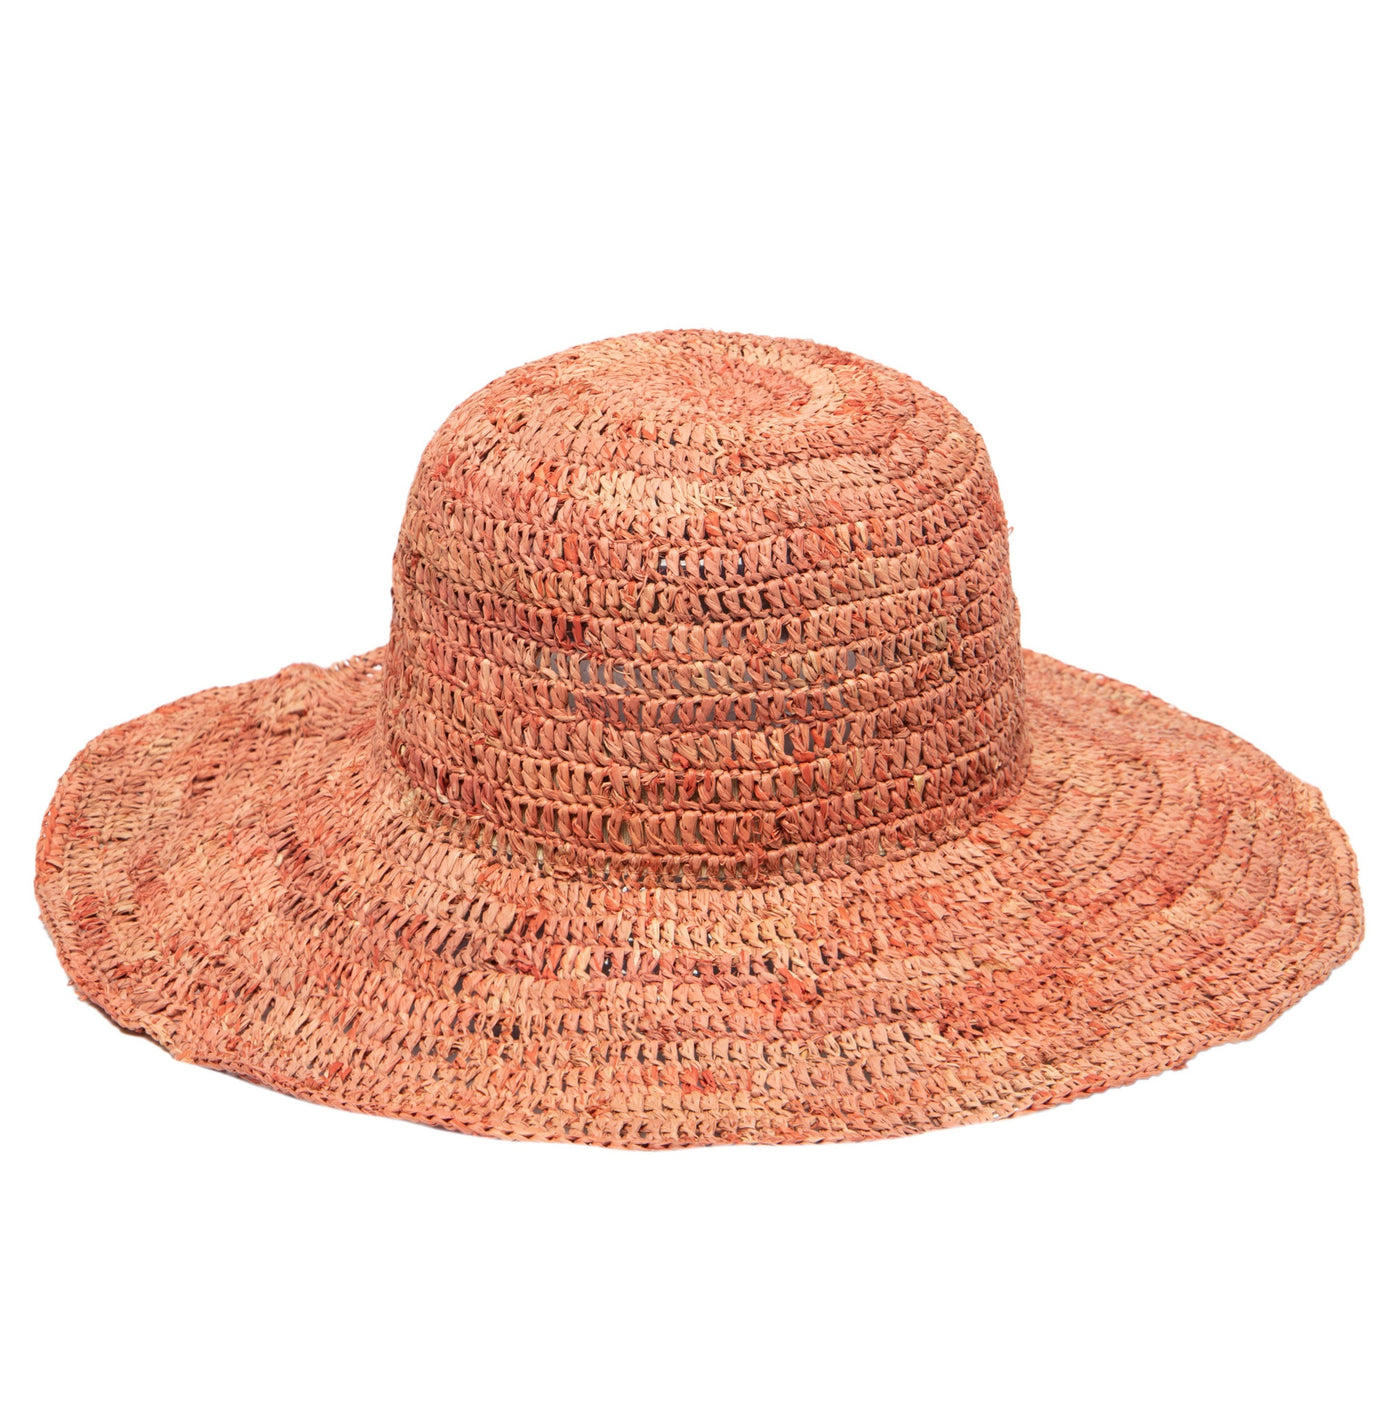 FLOPPY - The All Natural Crochet Sun Hat